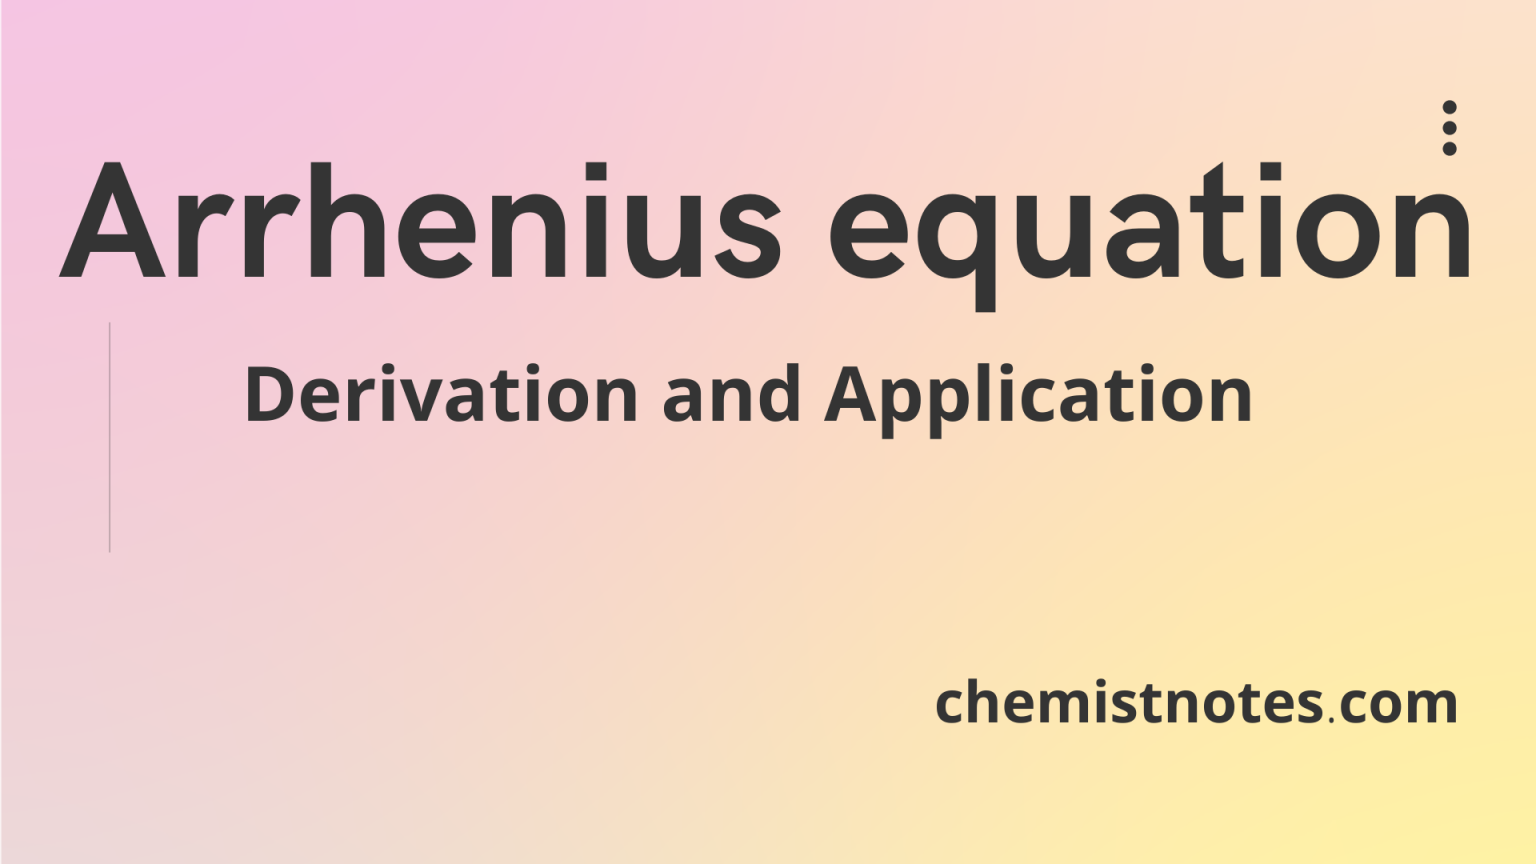 two-point-arrhenius-equation-easy-derivation-3-application